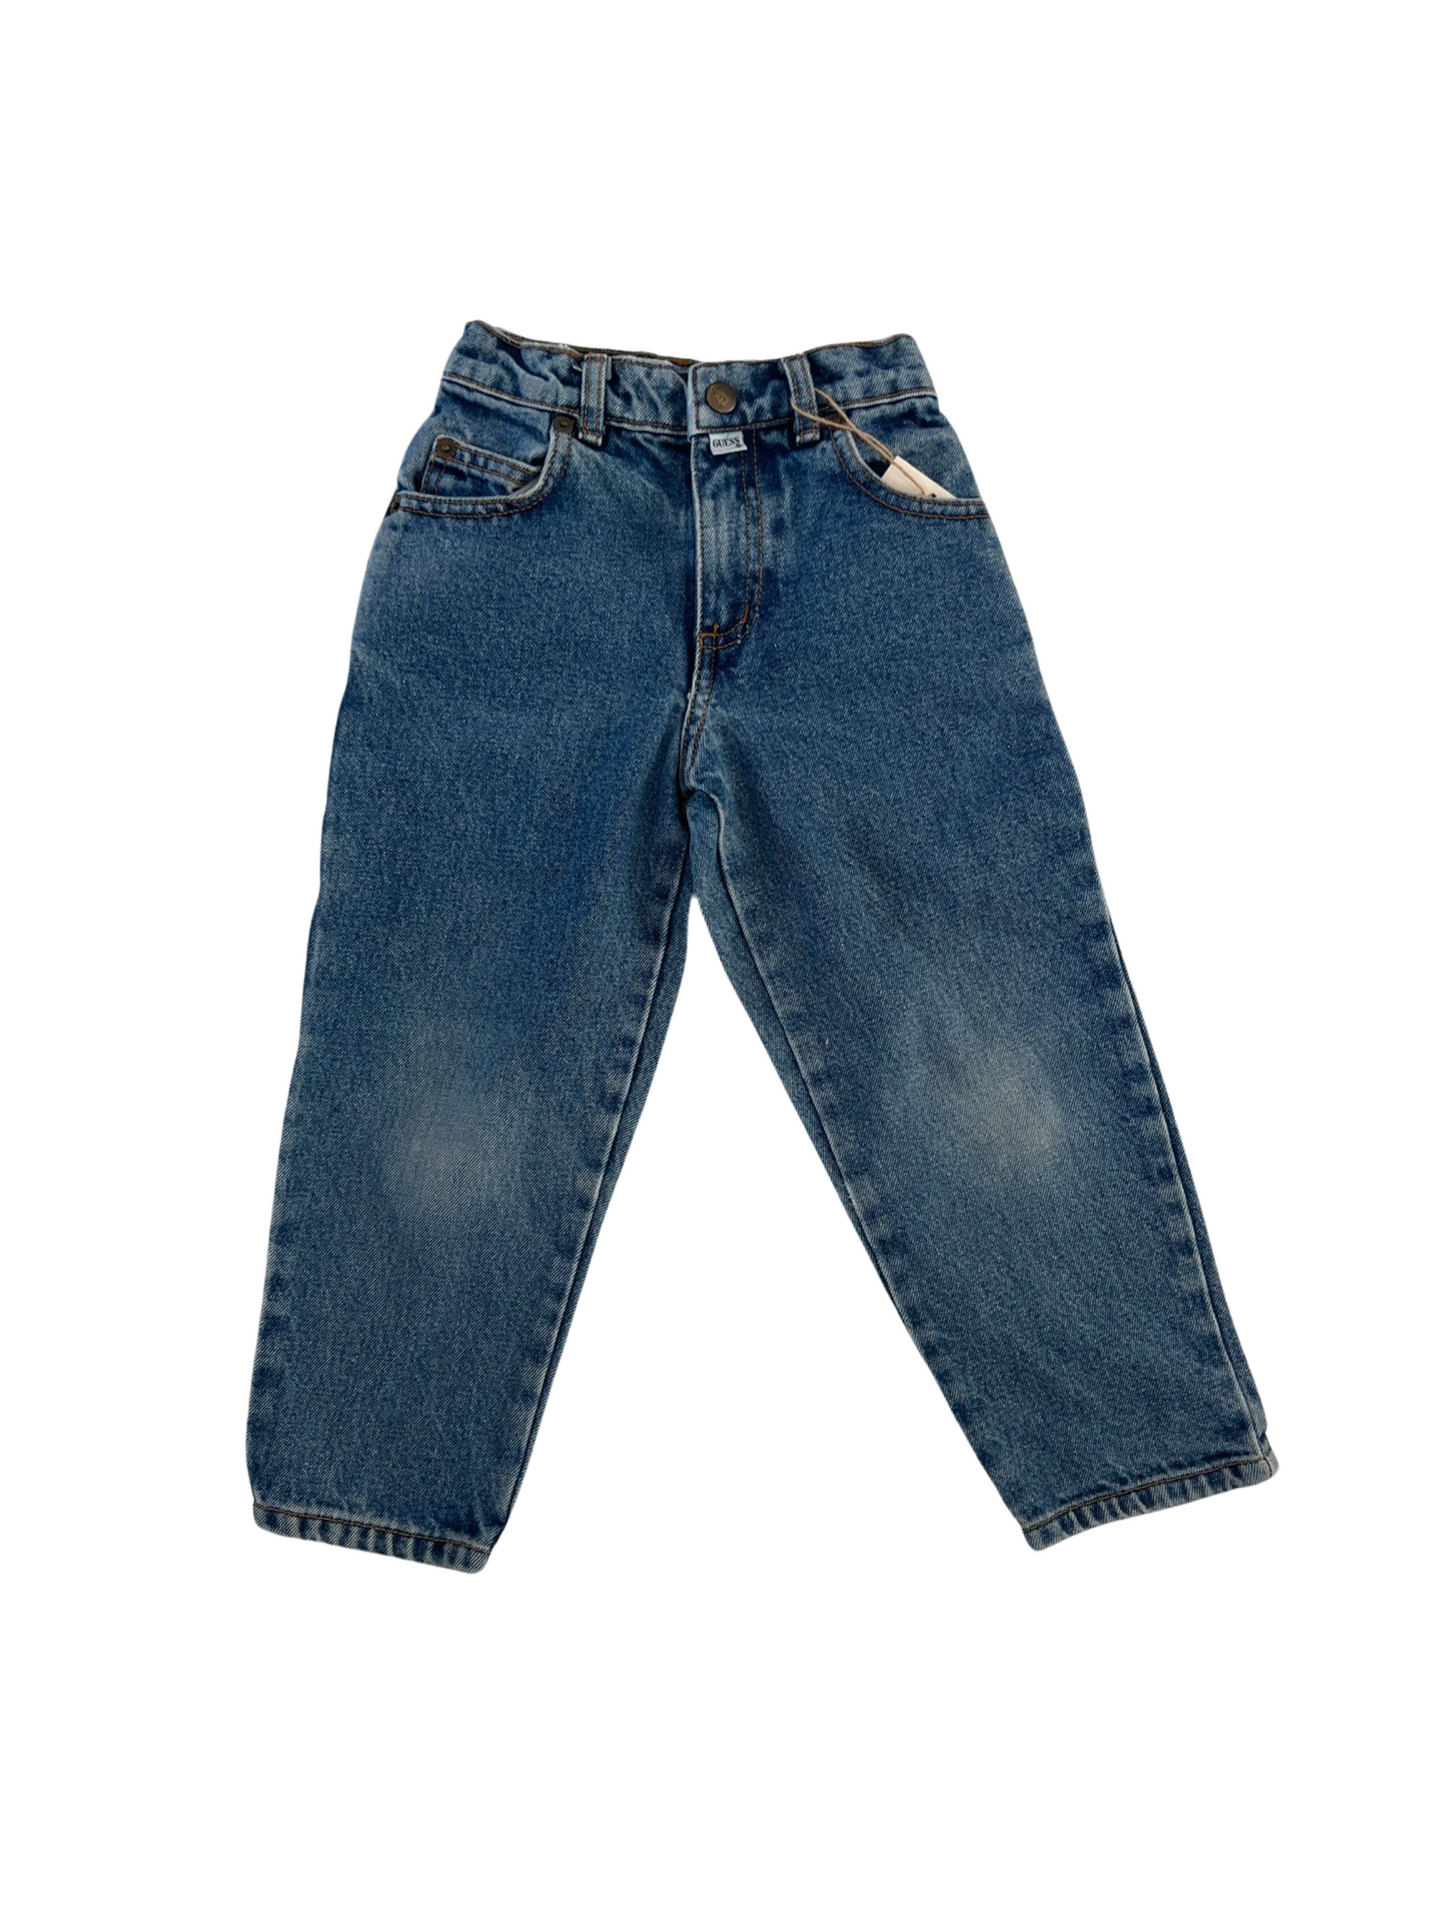 Vintage Guess Jeans - SIZE 4Y